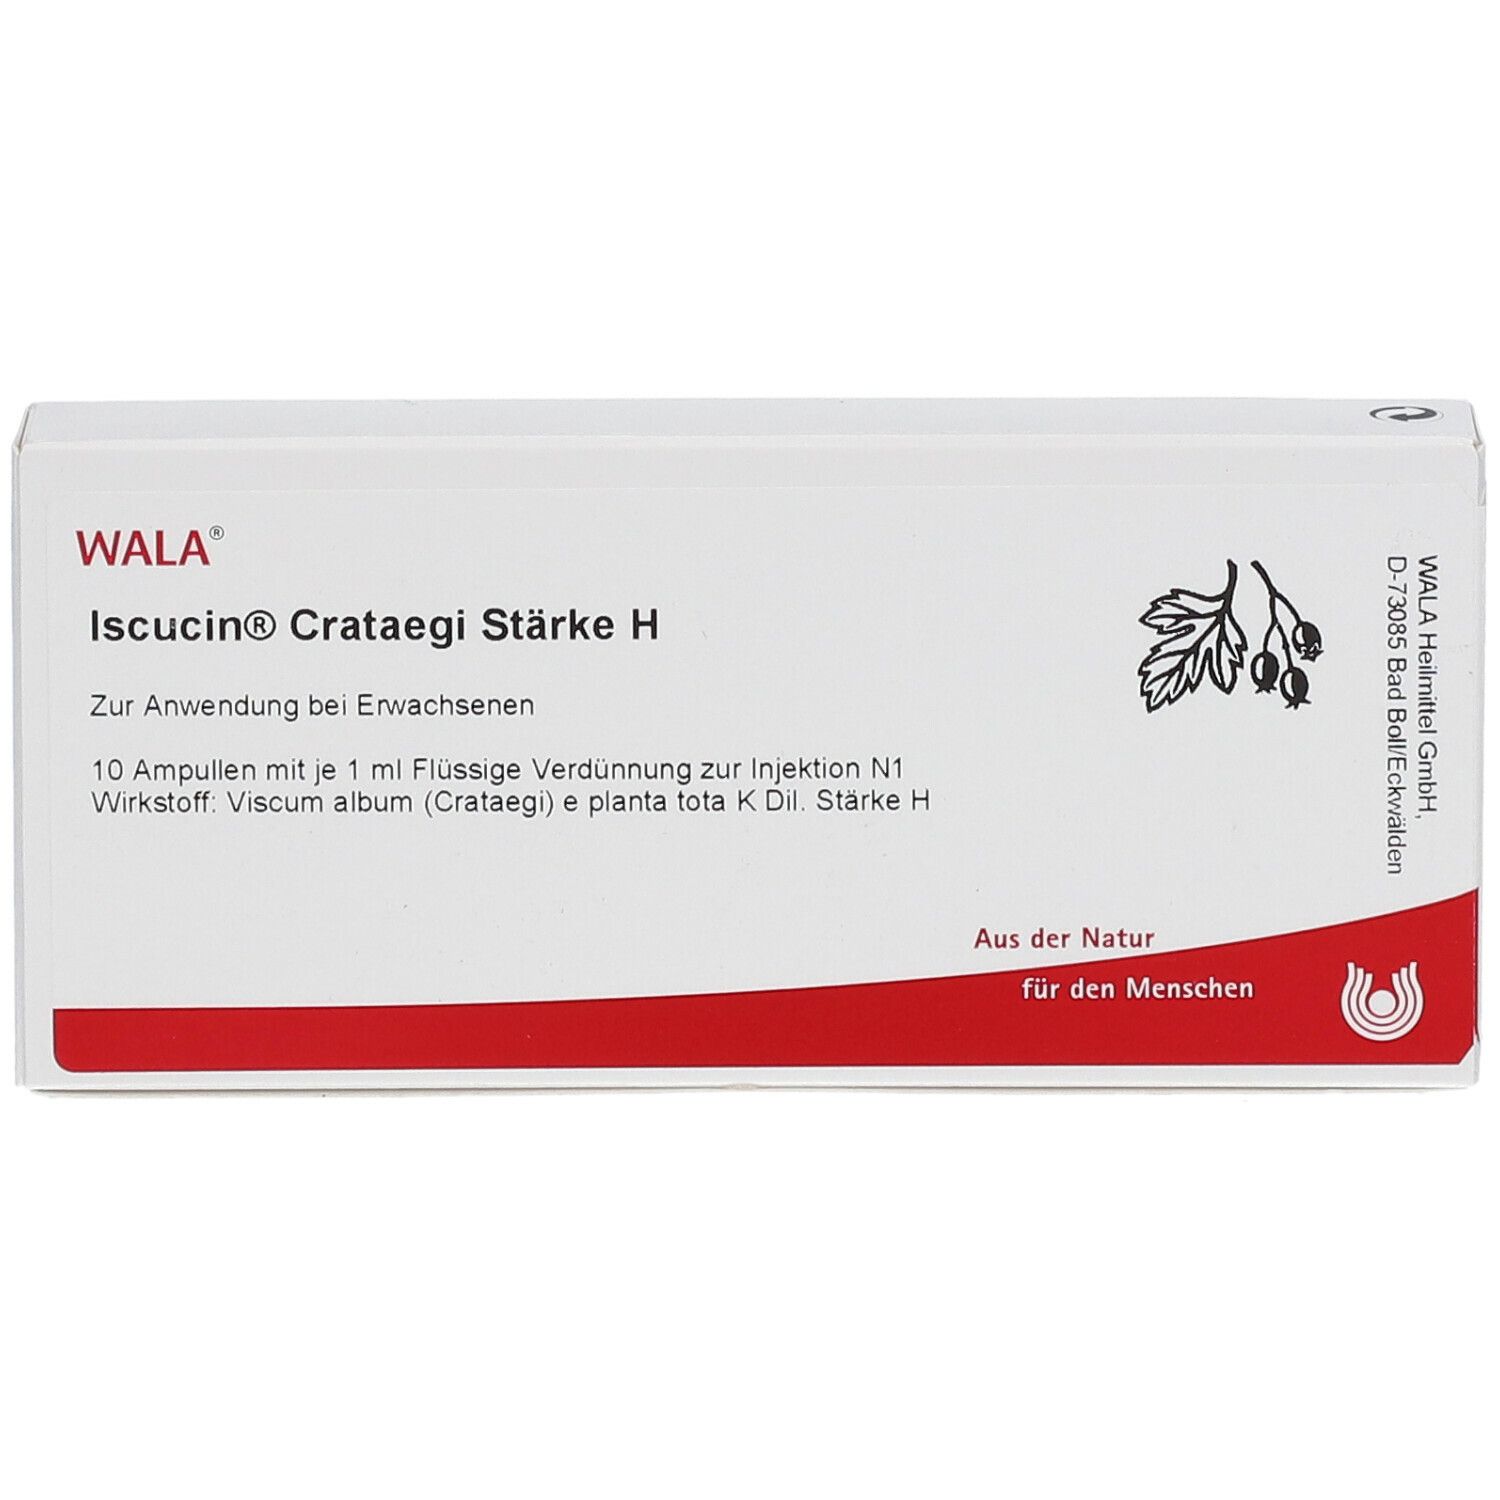 WALA® Iscucin Crataegi Stärke H Ampullen